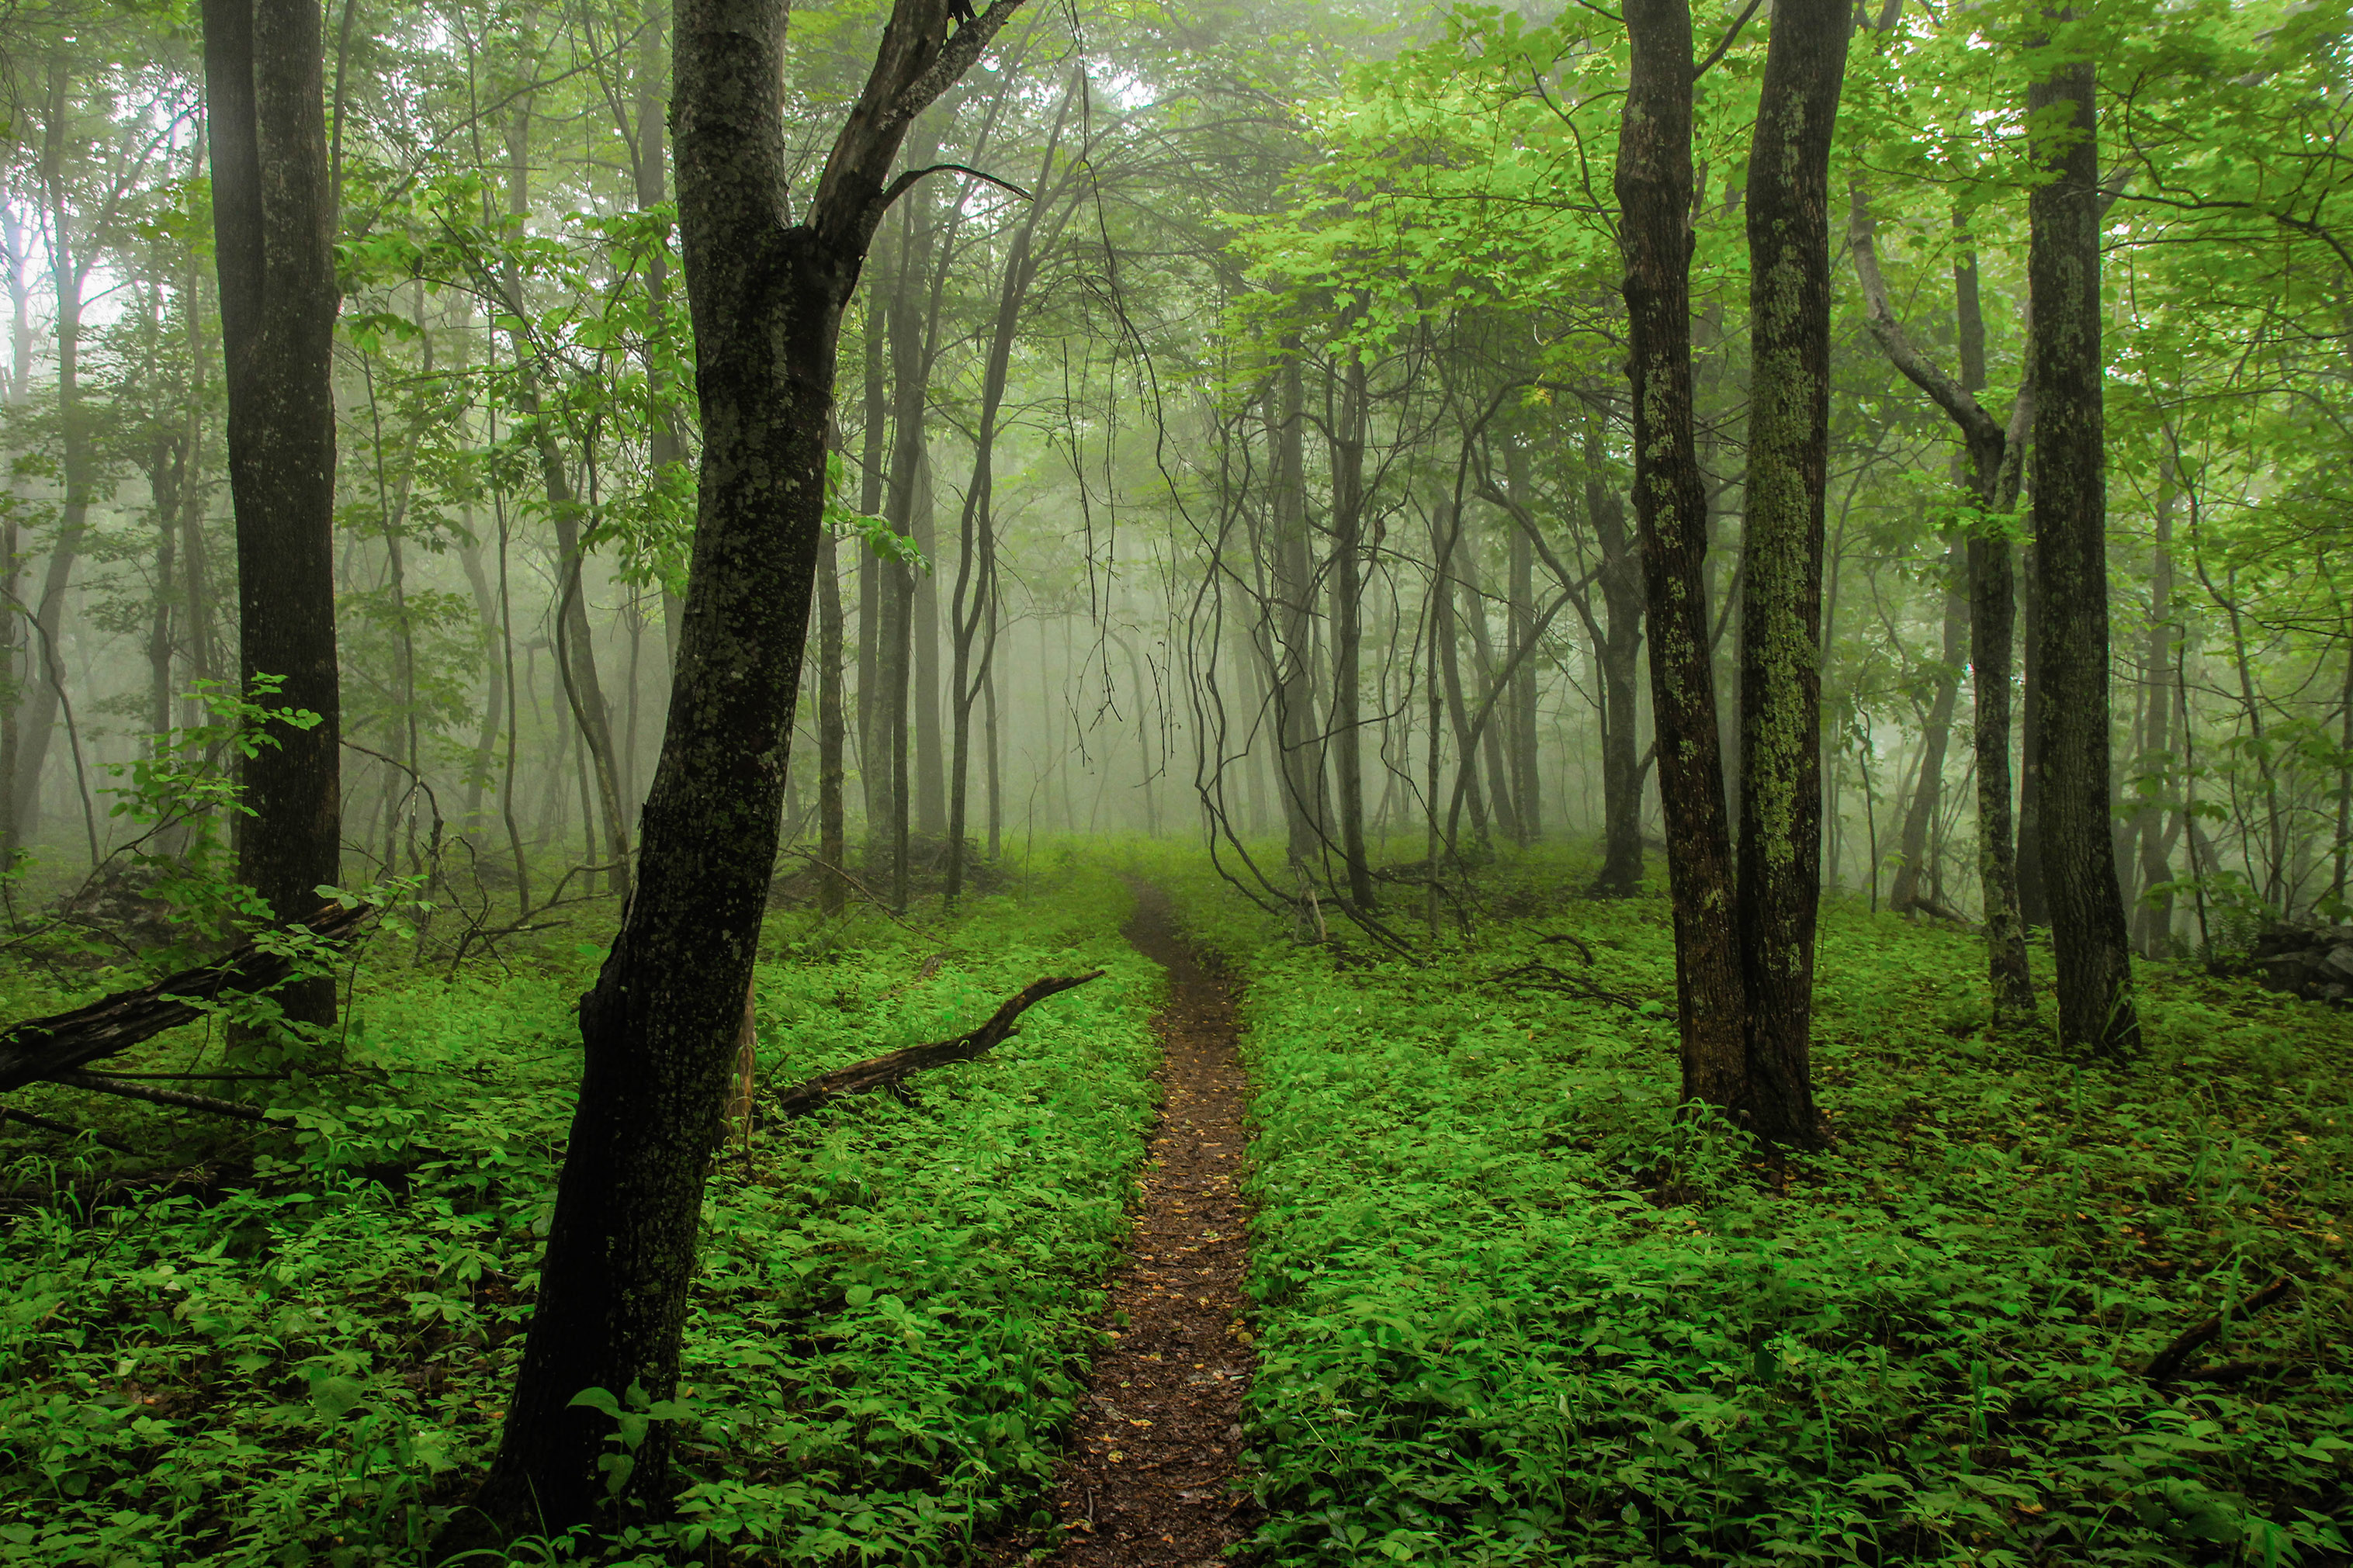 misty trail through green forested landscape, Appalachian Trail, Virginia